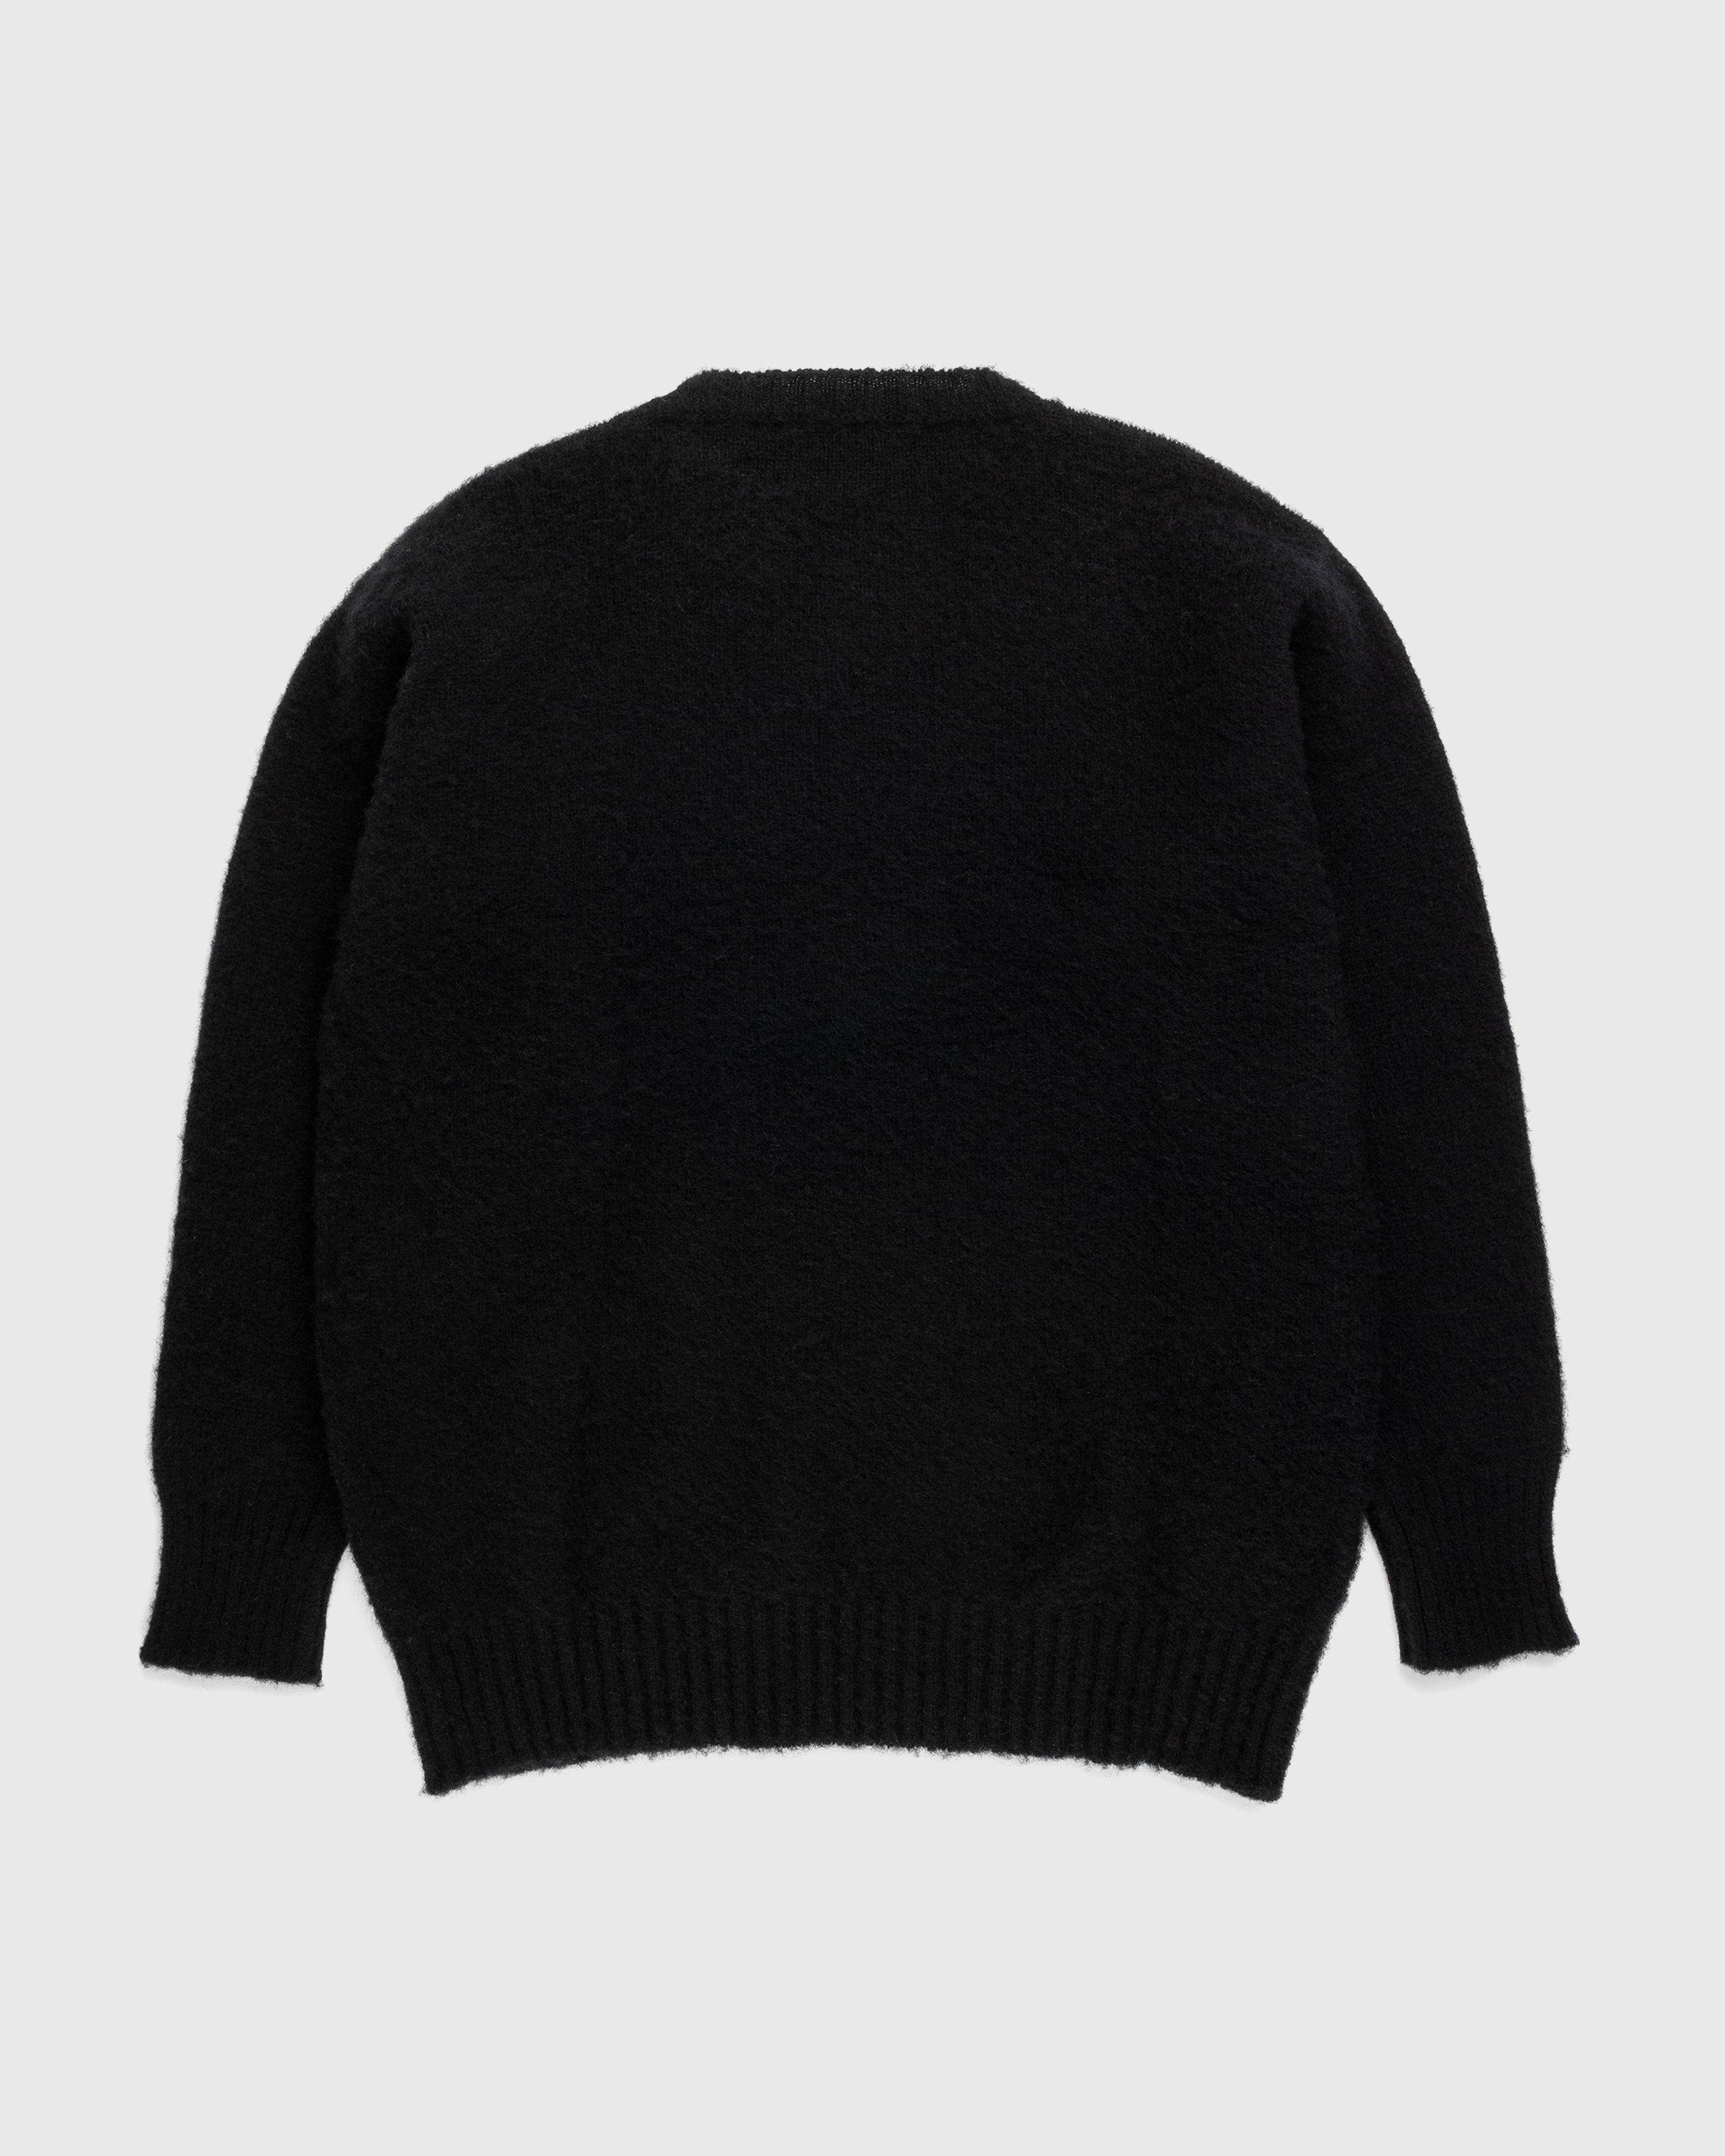 J. Press x Highsnobiety - Shaggy Dog Solid Sweater Black - Clothing - Black - Image 2